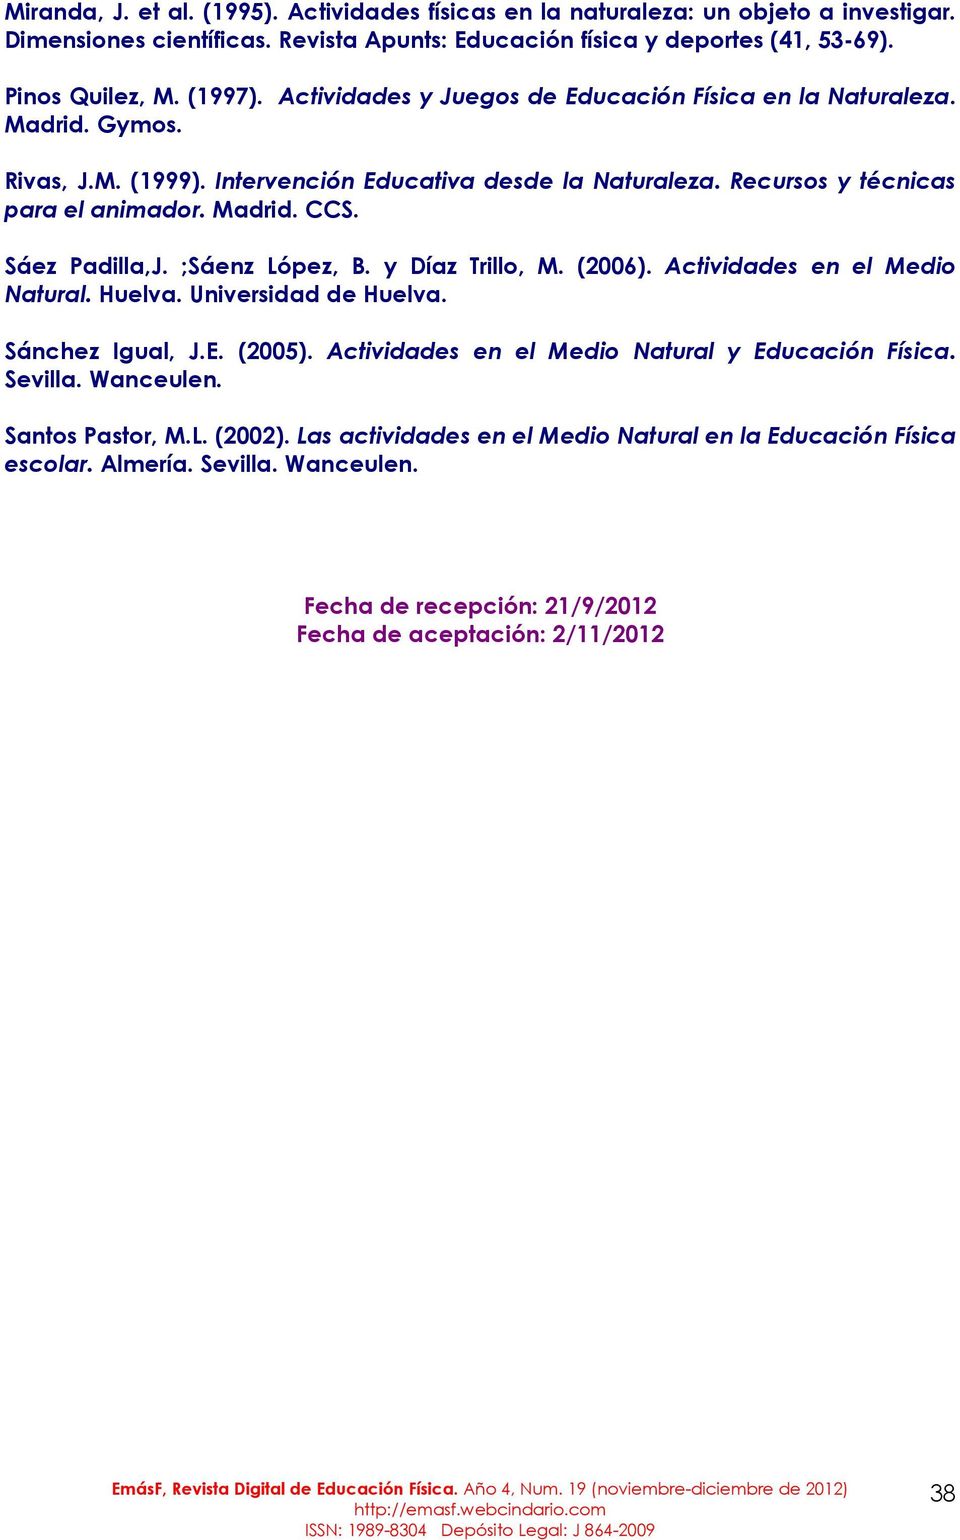 Sáez Padilla,J. ;Sáenz López, B. y Díaz Trillo, M. (2006). Actividades en el Medio Natural. Huelva. Universidad de Huelva. Sánchez Igual, J.E. (2005).